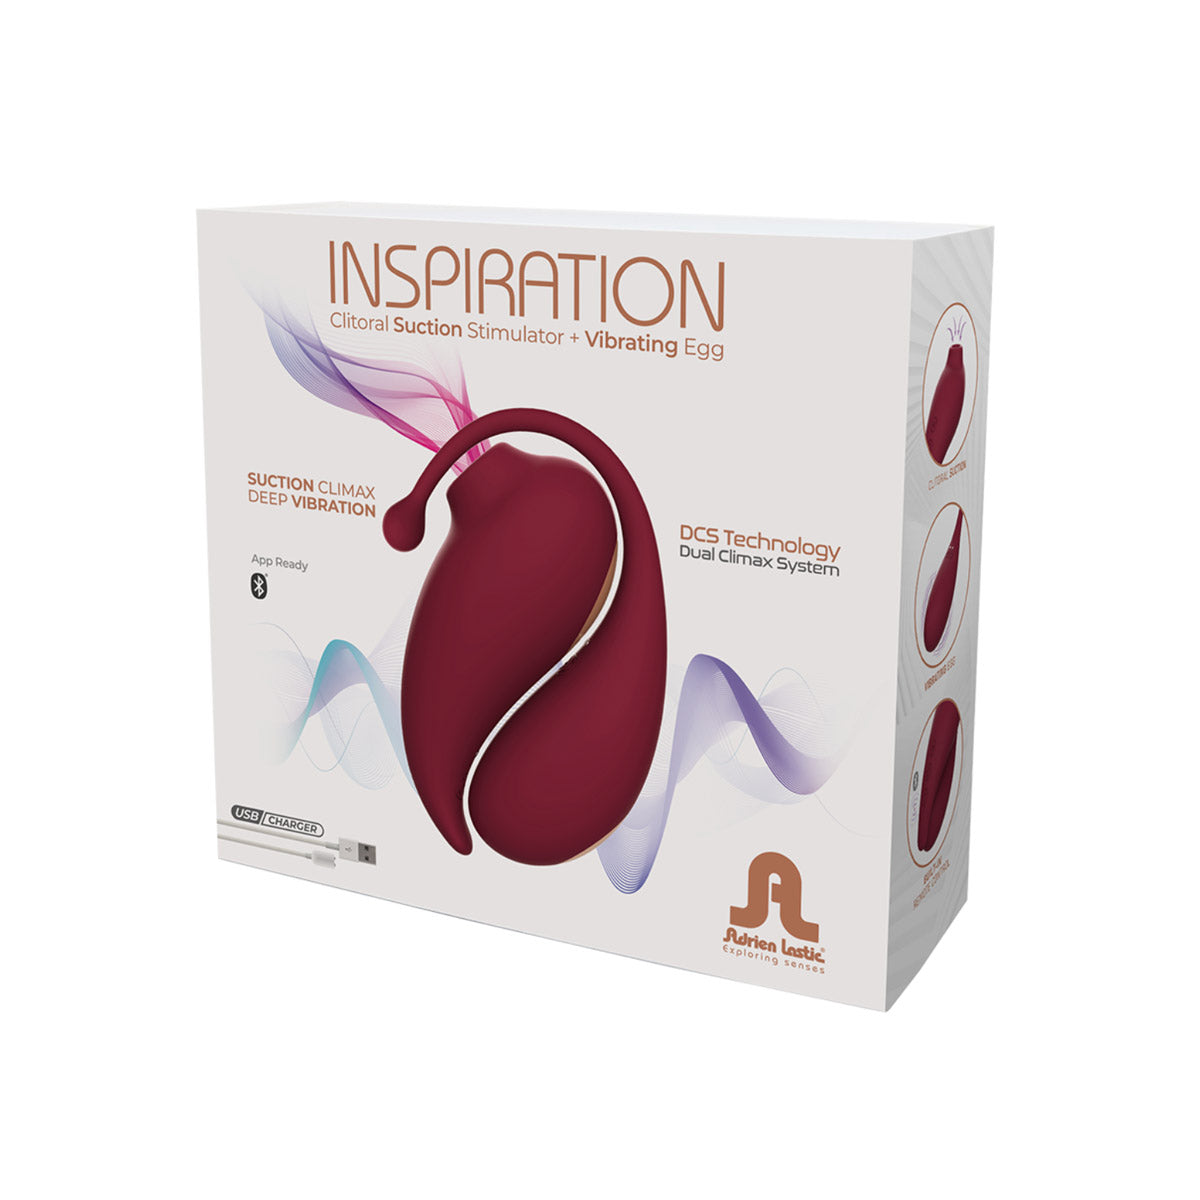 Adrien Lastic Inspiration Clitoral Suction Stimulator and Vibrating Egg